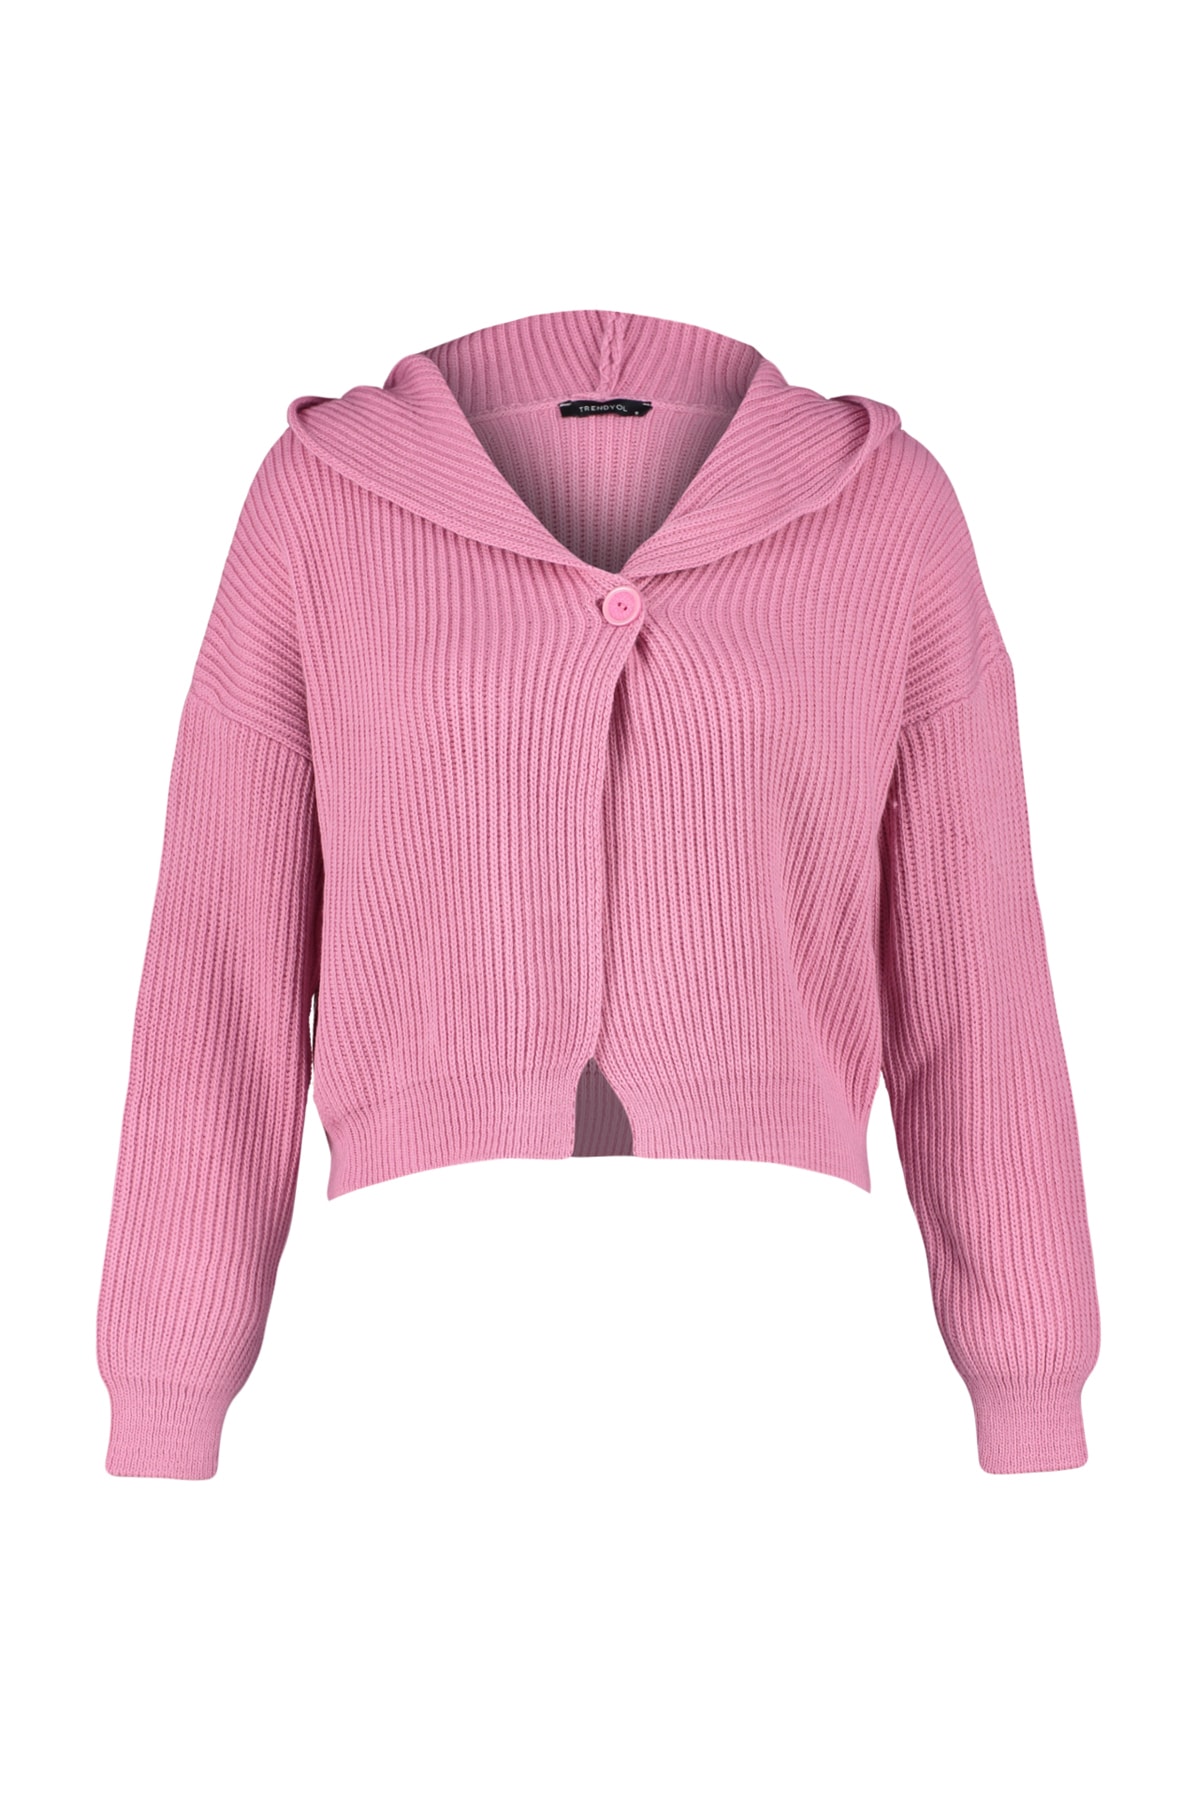 Trendyol Pink Hooded Knitwear Cardigan